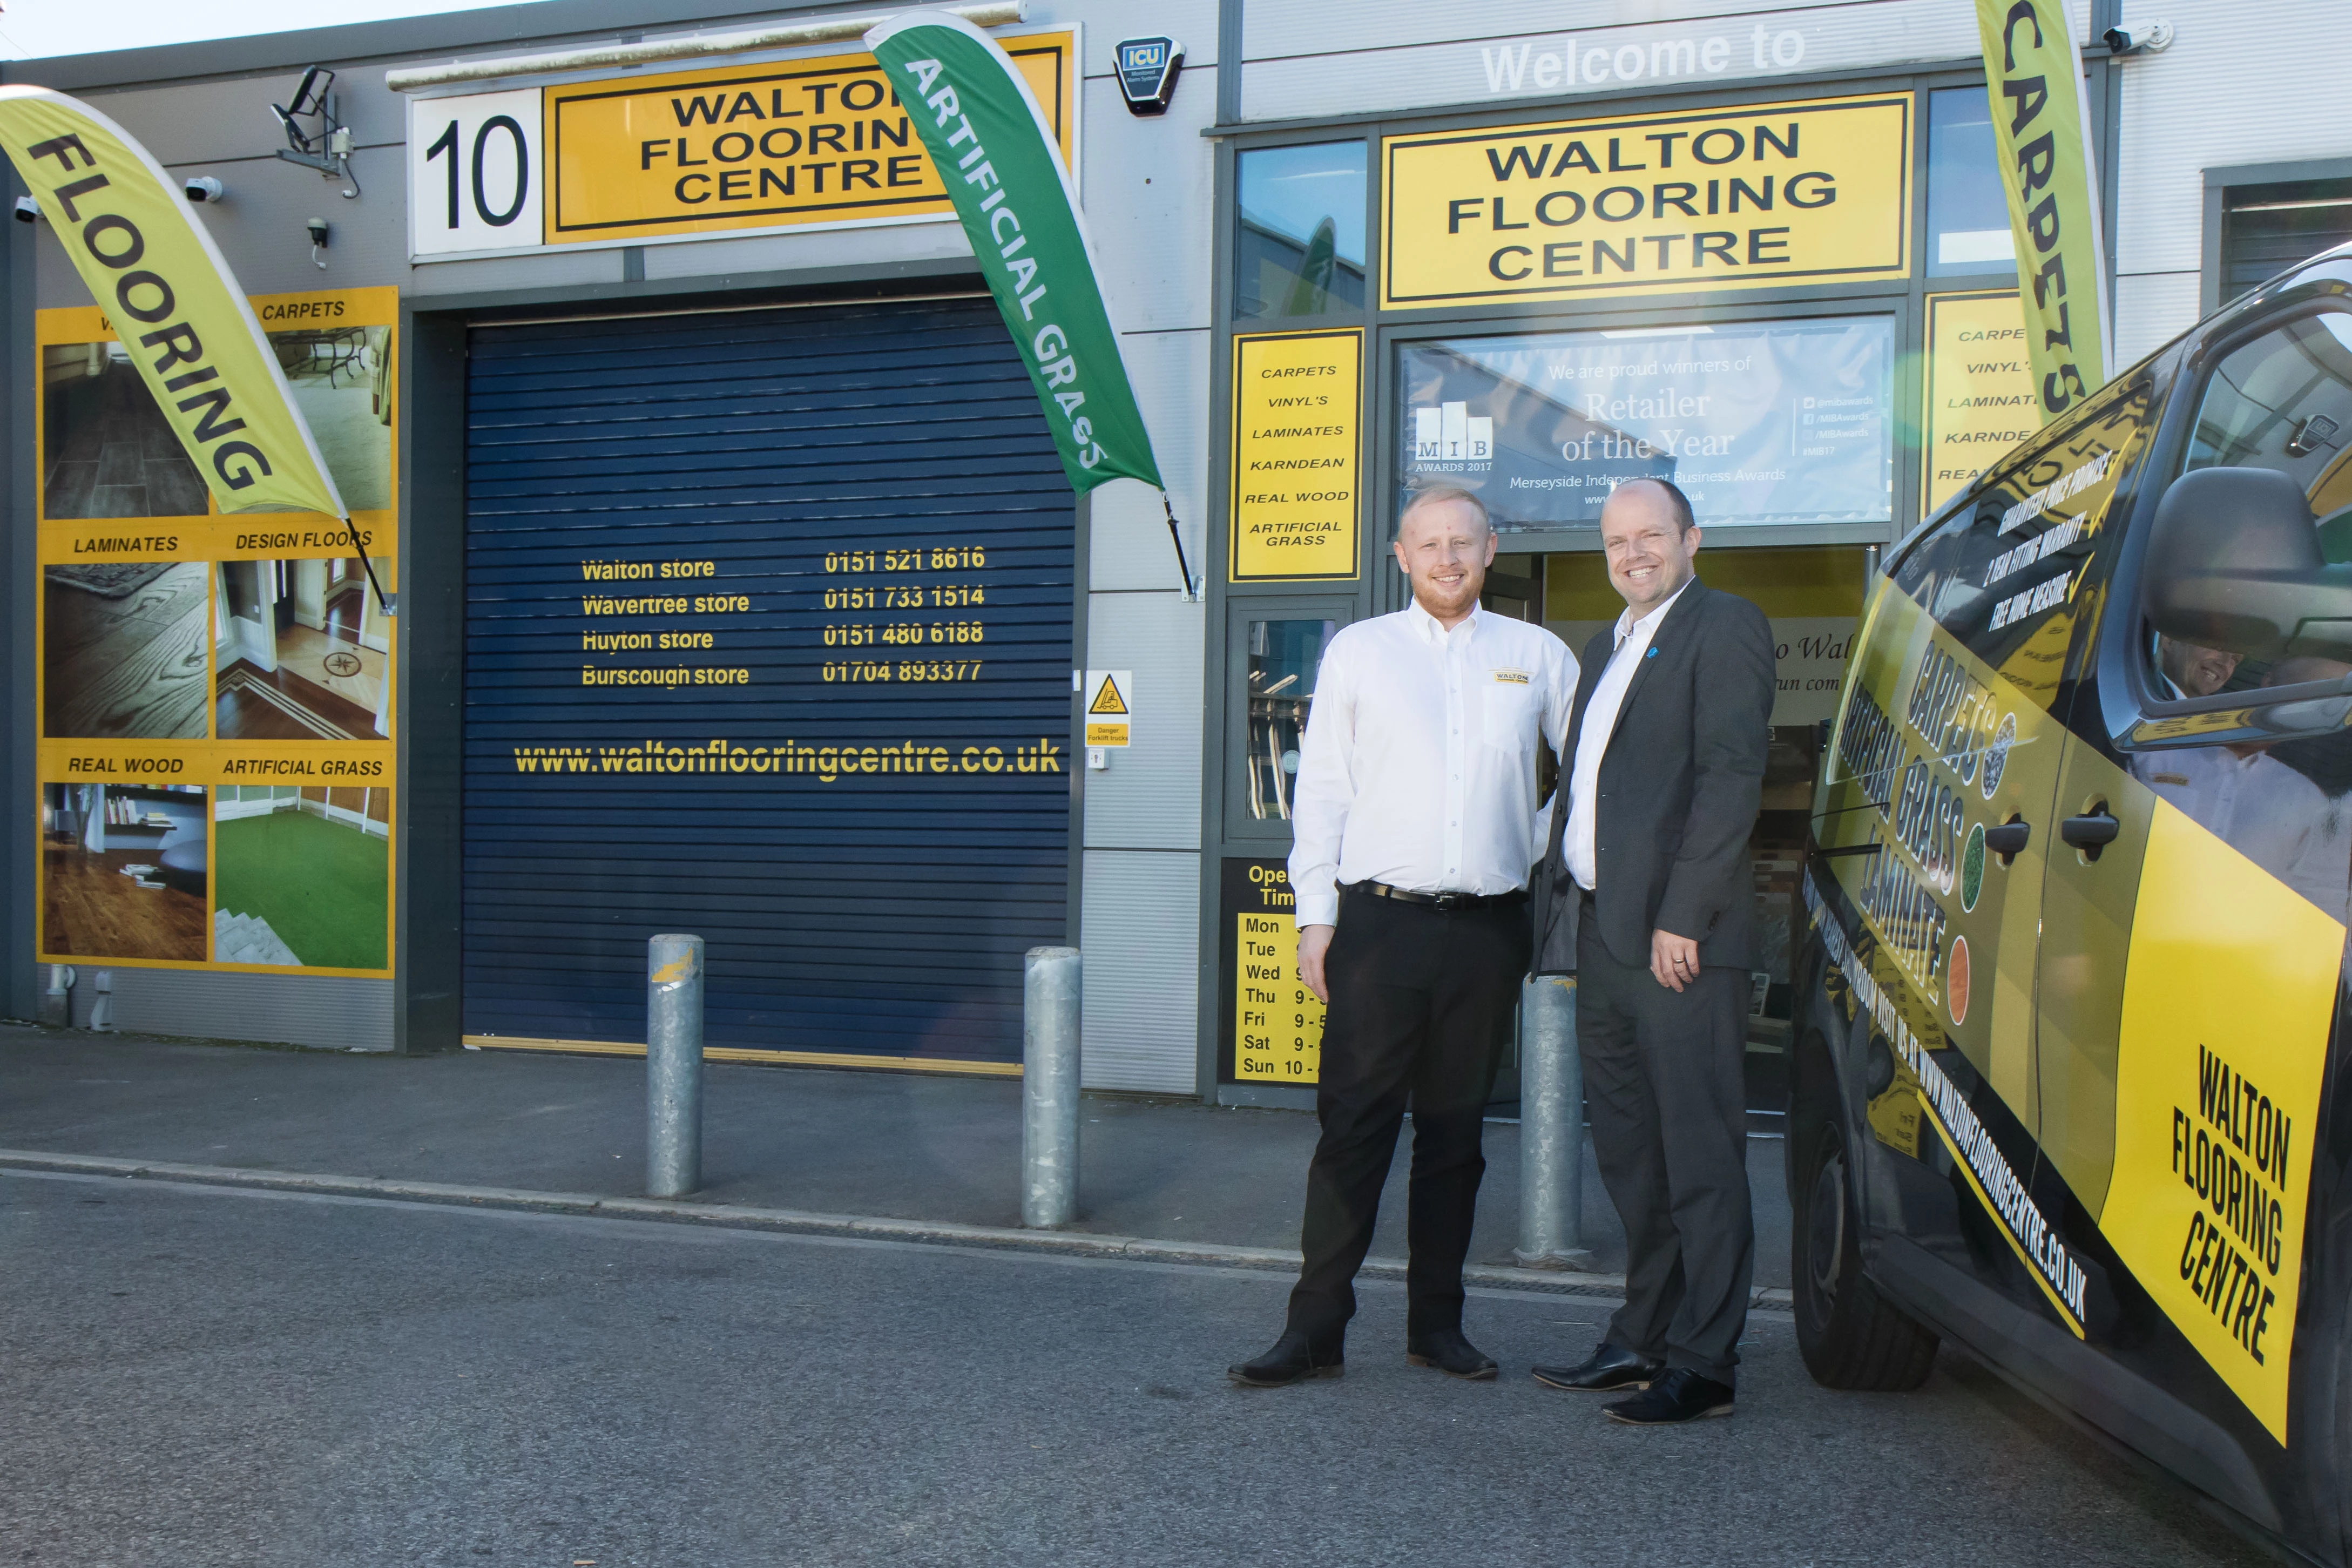 James Harper of Walton Flooring Centre and Paul Trickett of Bathgate Business Finance outside Walton Flooring Centre headquarters in Huyton